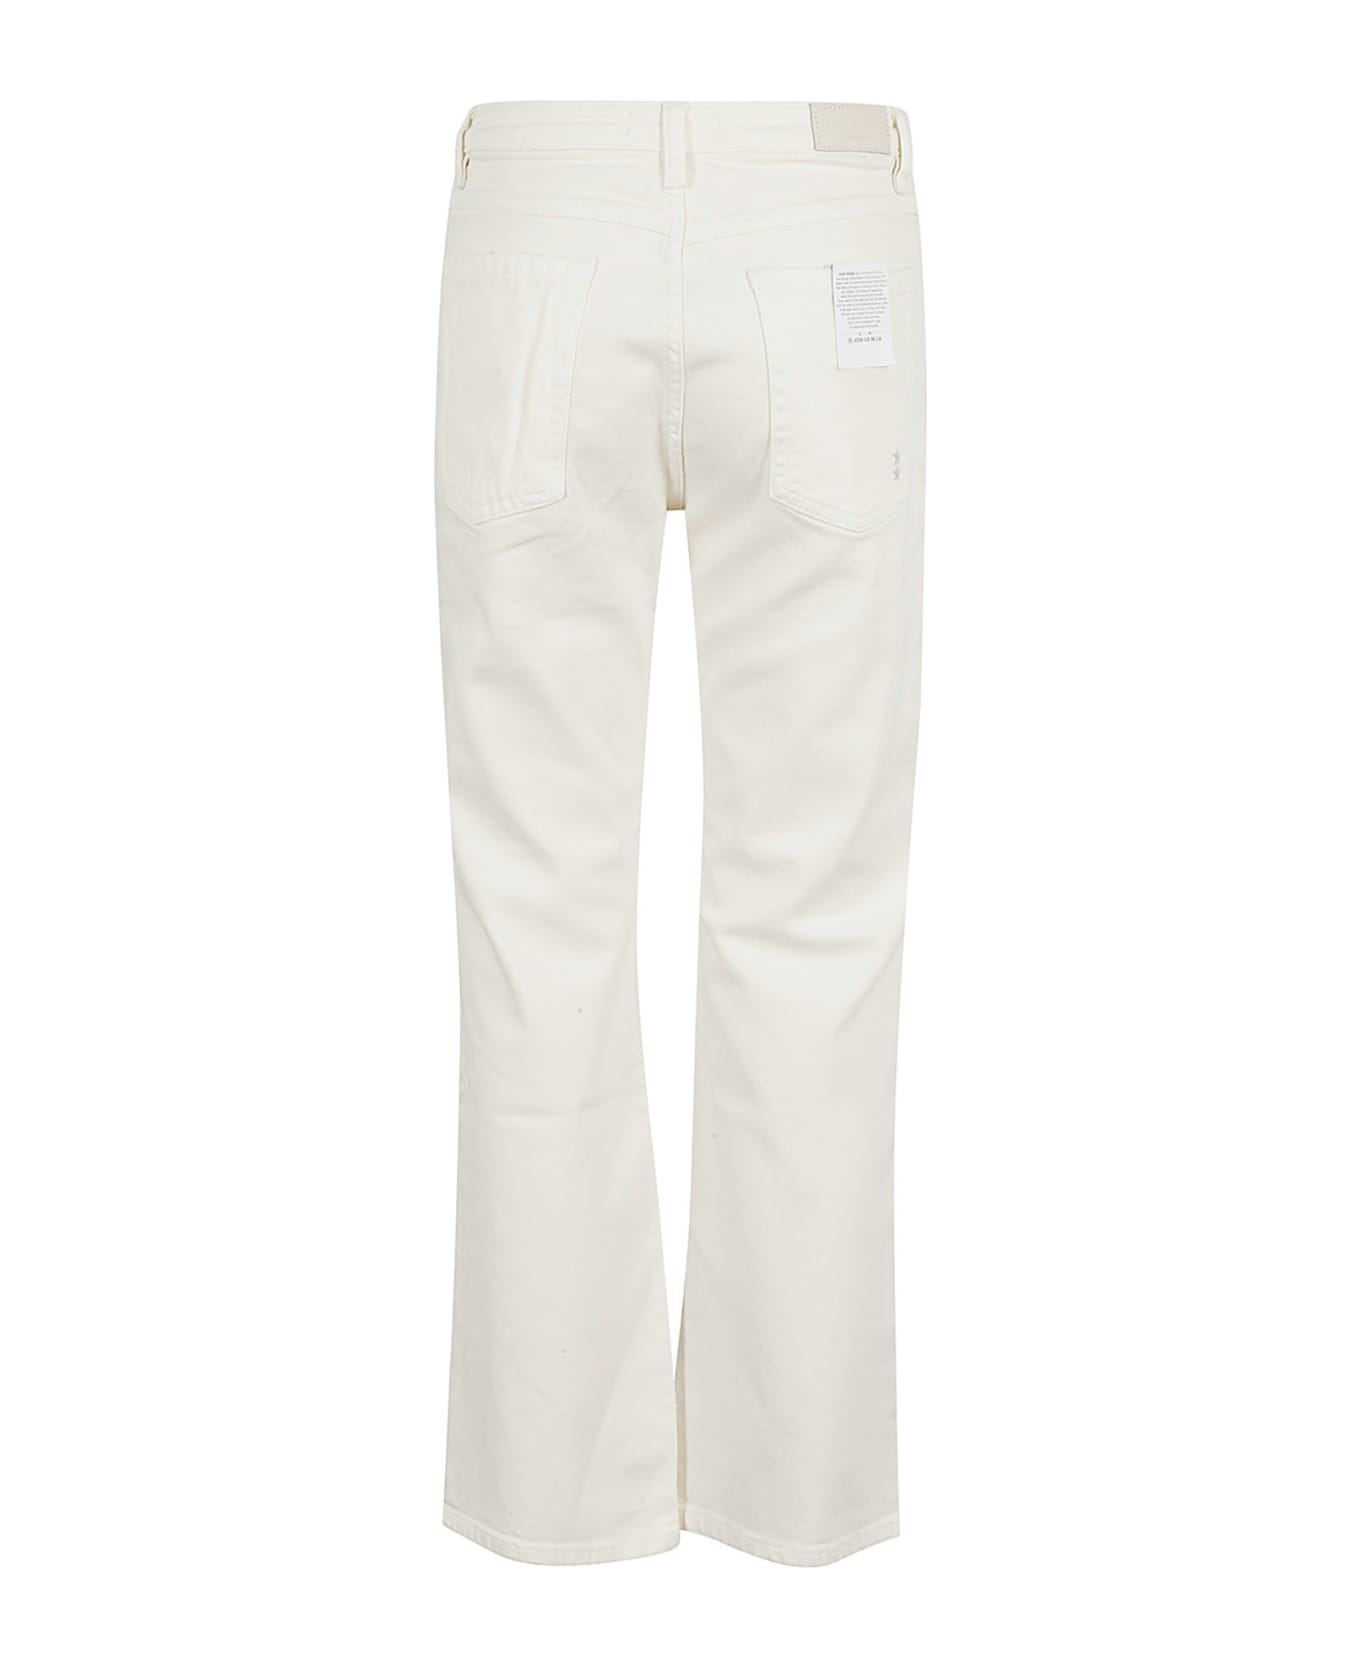 Icon Denim Jeans - White Cream ボトムス